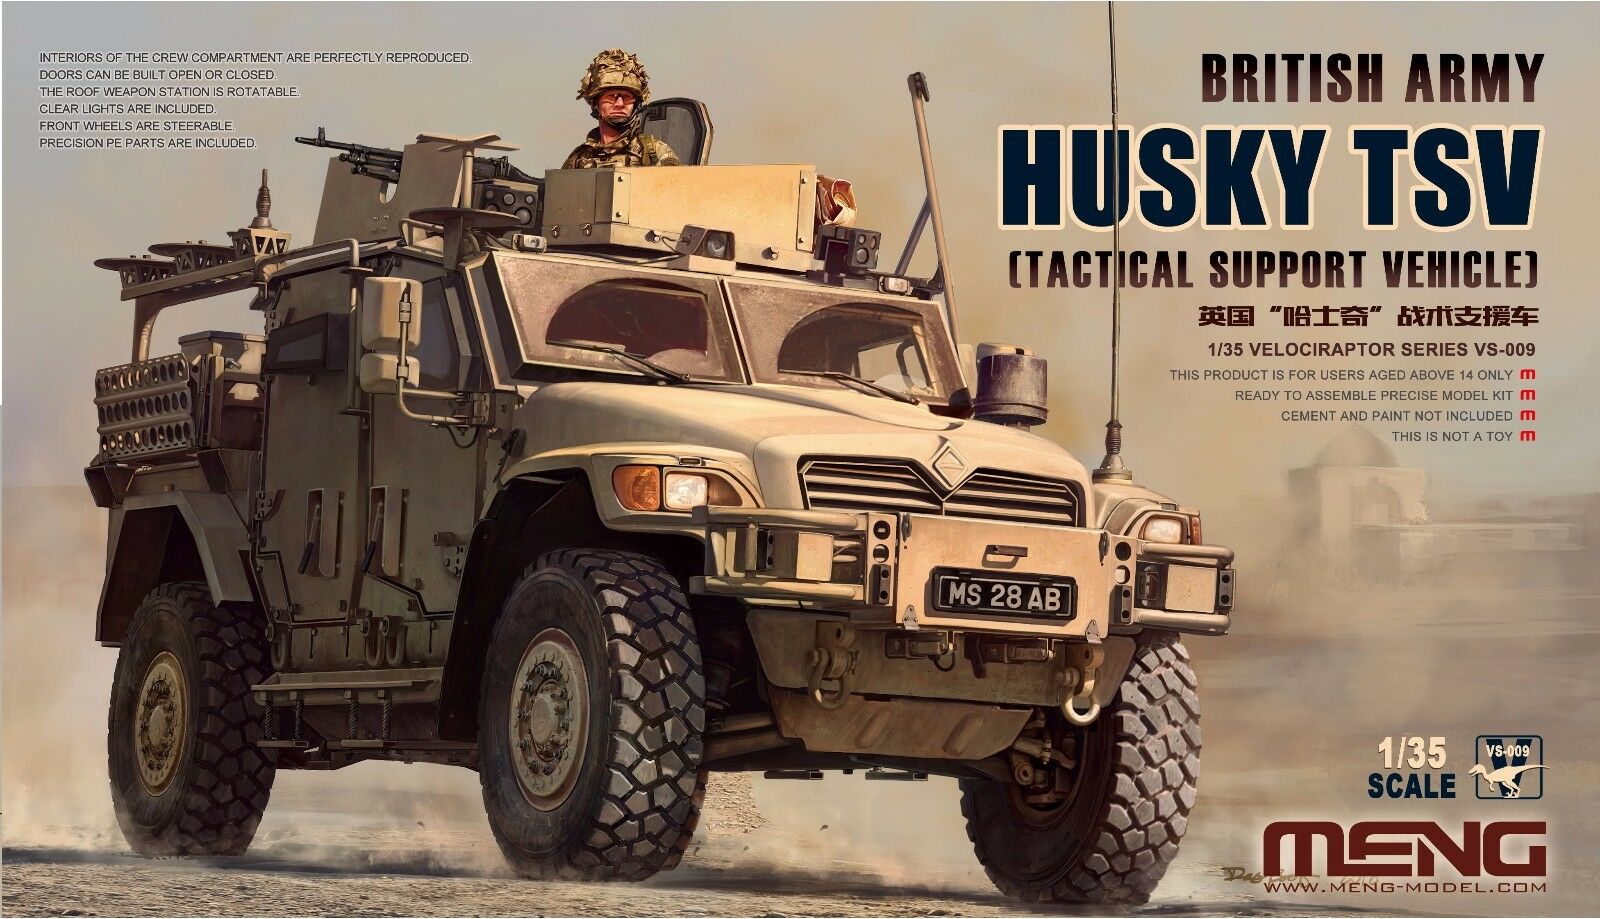 VS-009  техника и вооружение  British Army HUSKY TSV (Tactical Support Vehicle)  (1:35)